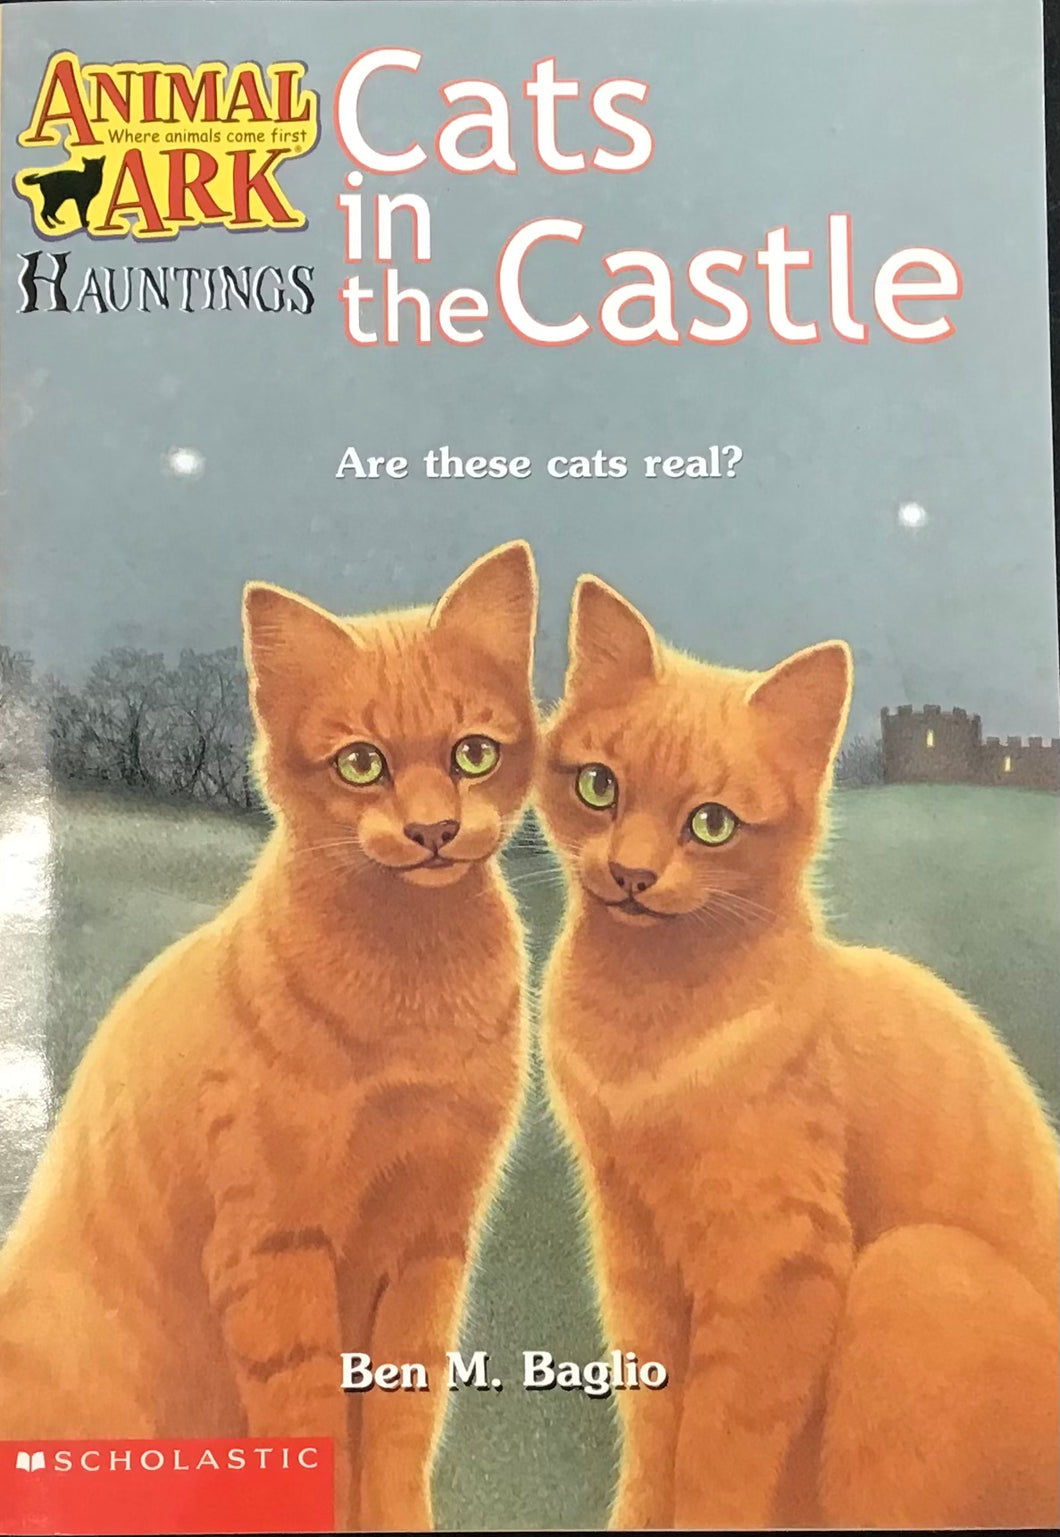 Animal Ark: Cats in the Castle- Ben M. Baglio